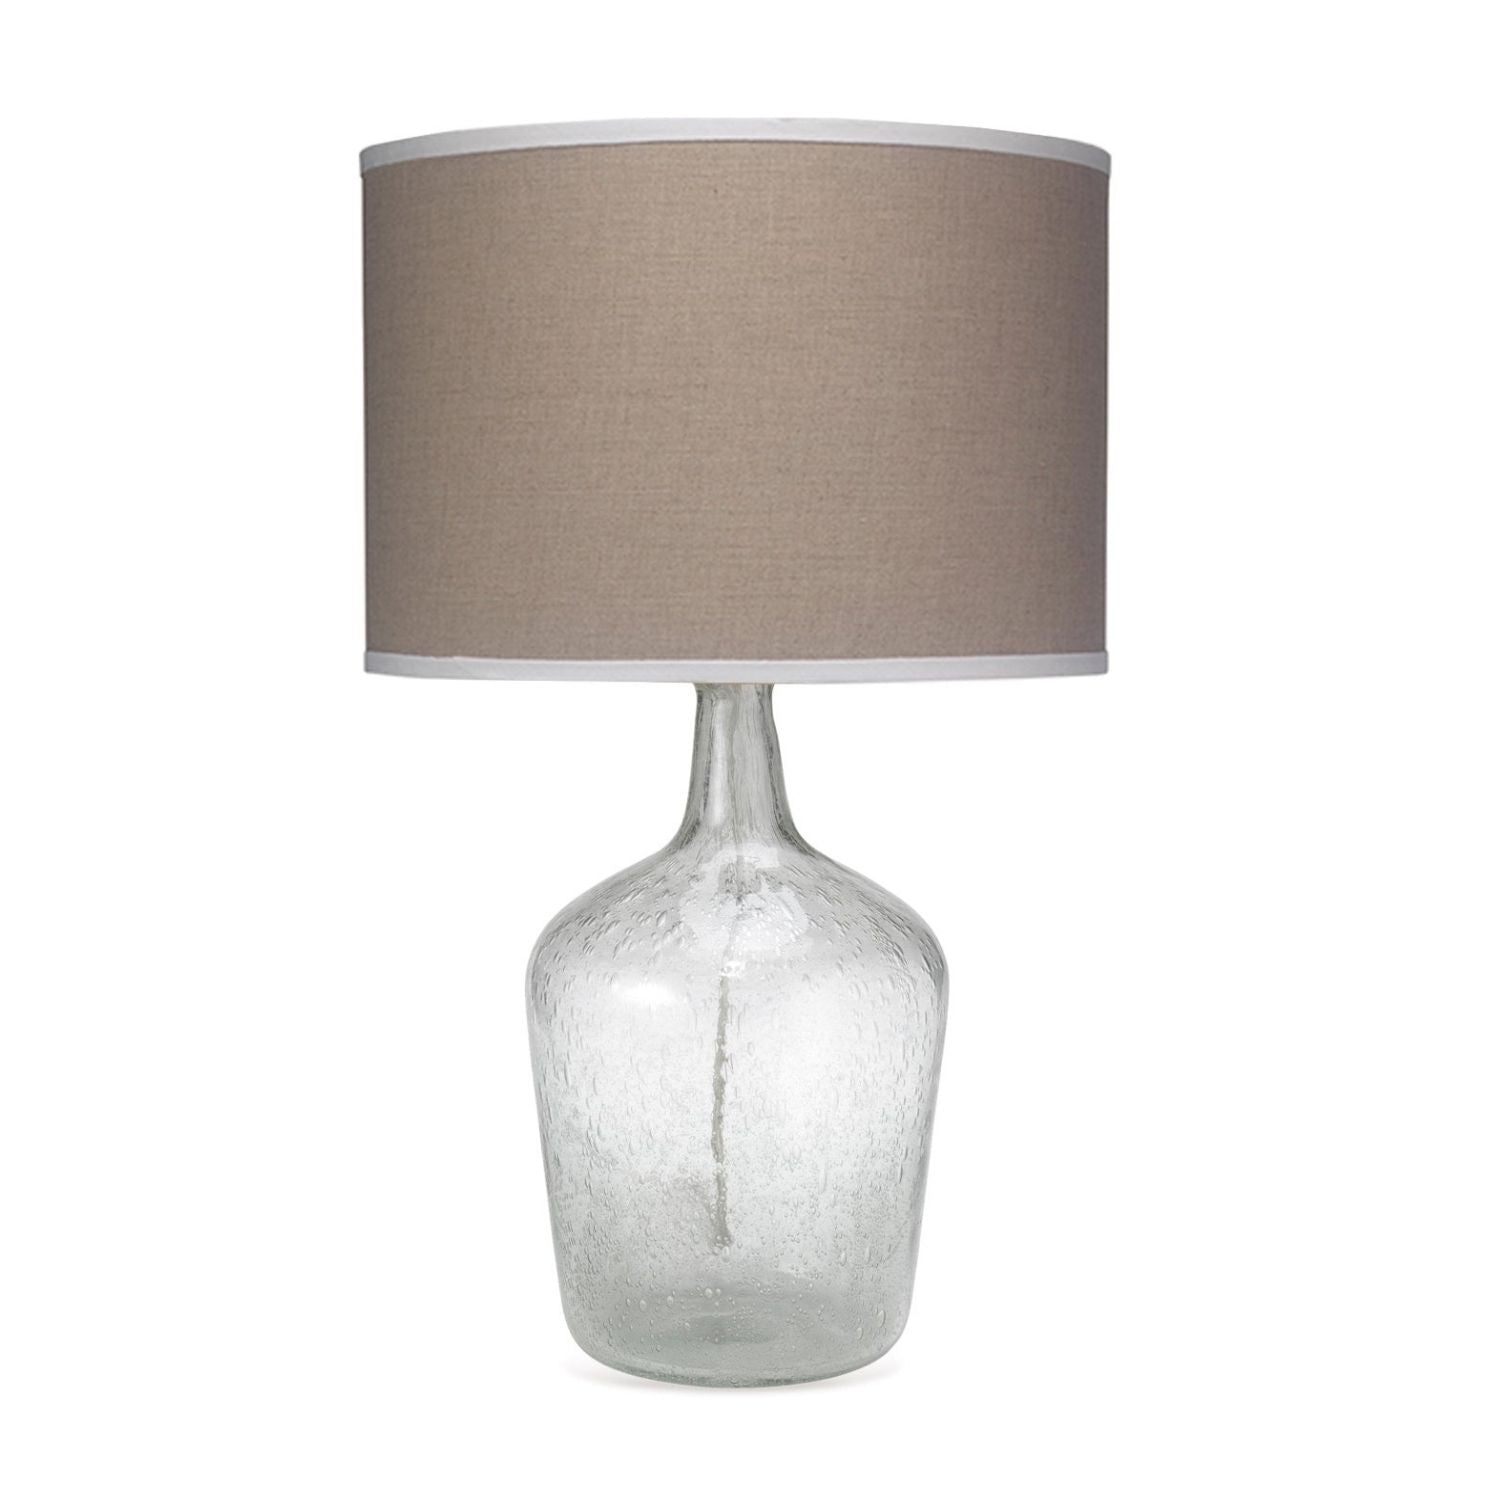 Plum Jar Glass Table Lamp, Clear